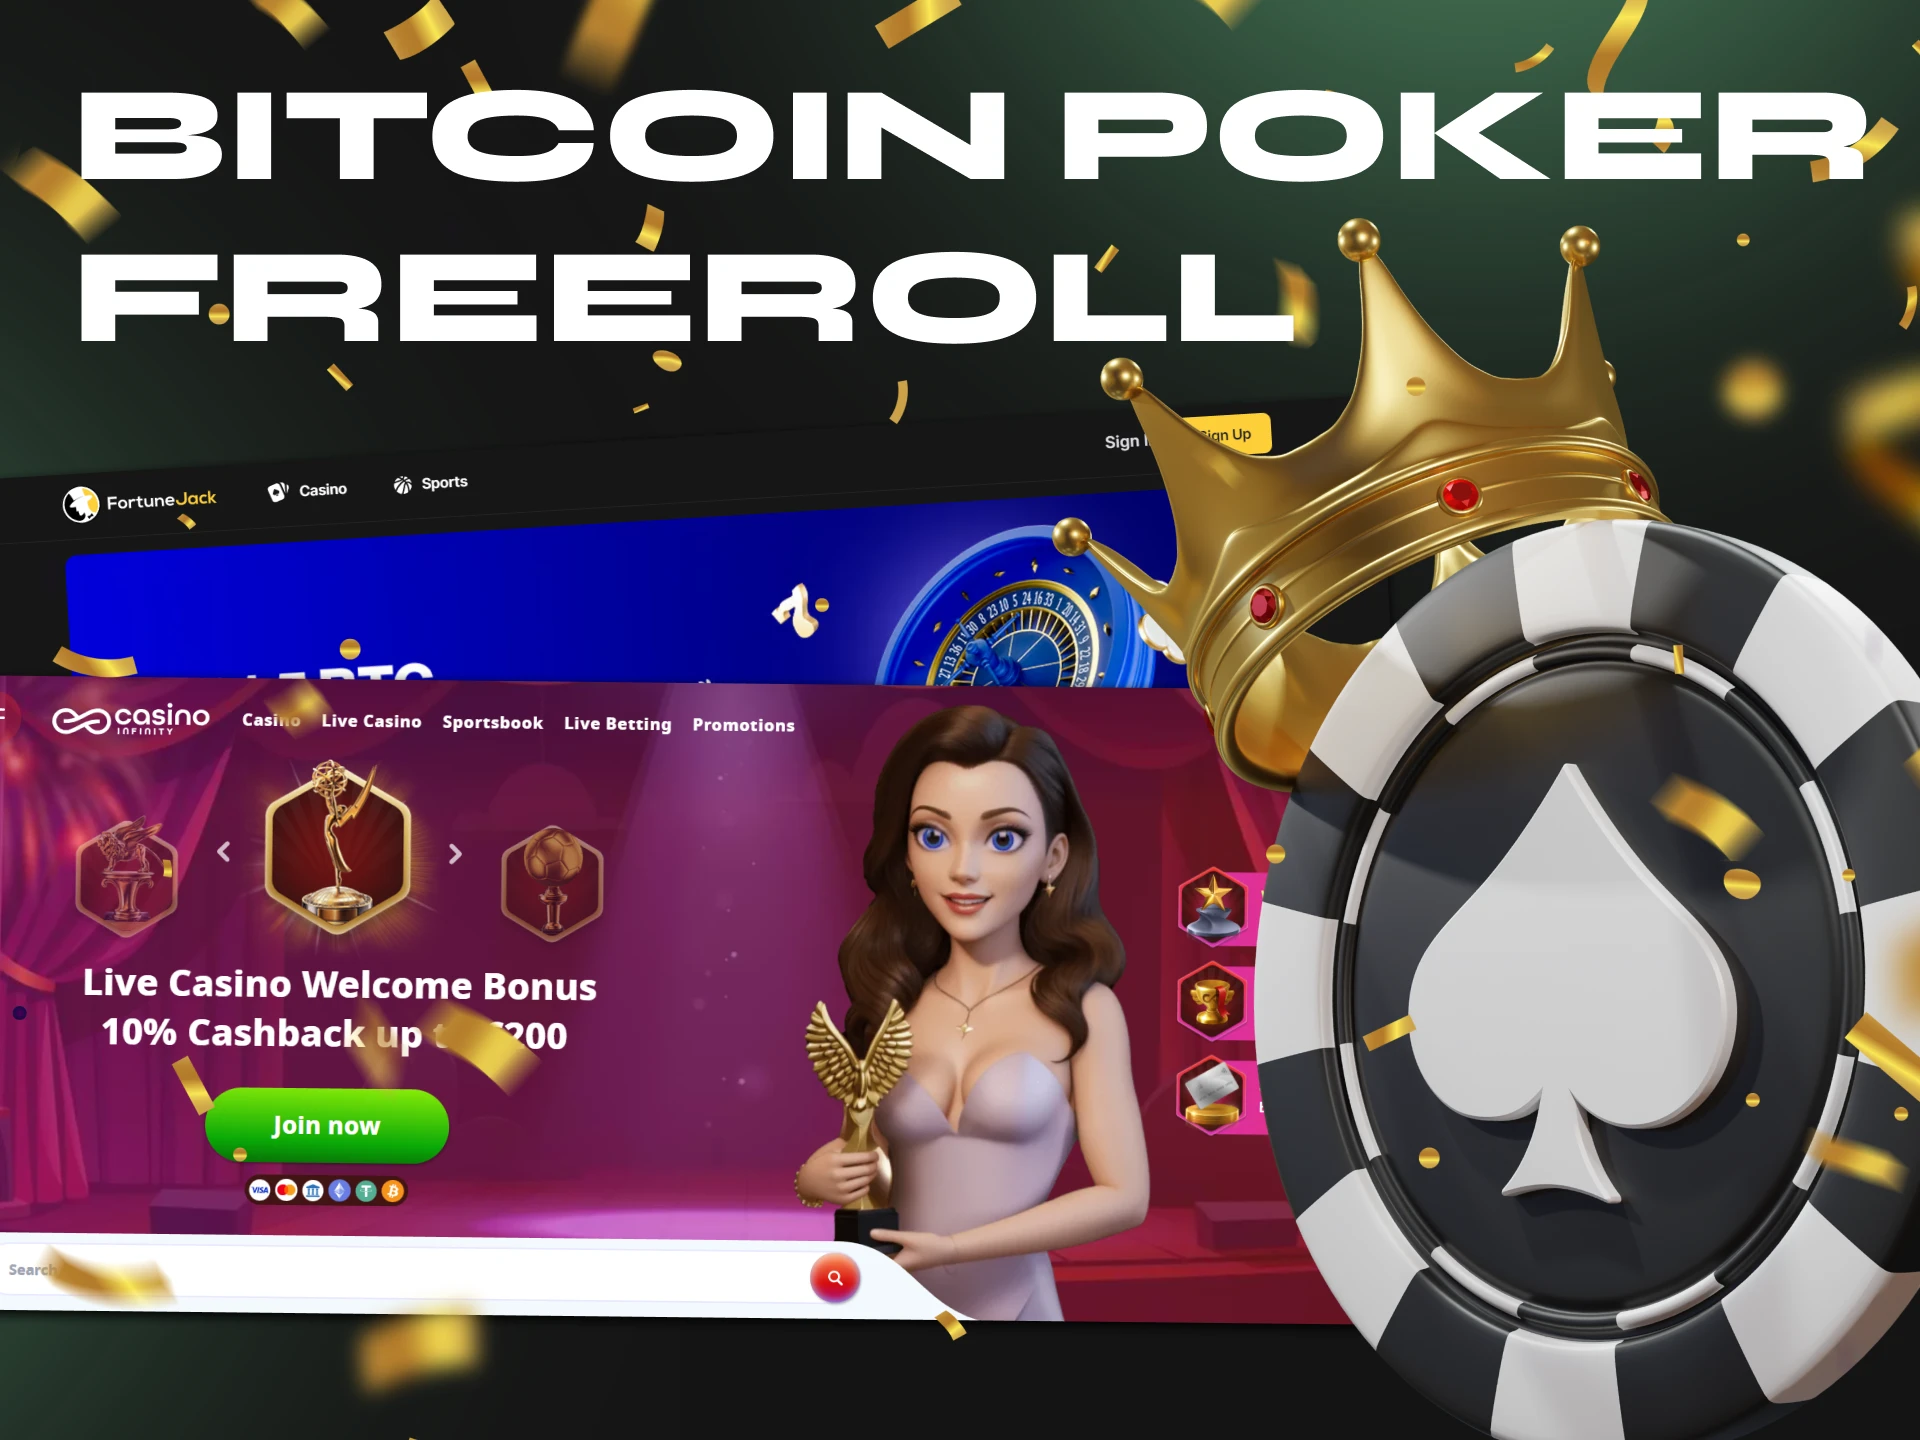 Join the Bitcoin Poker Freeroll and win big.